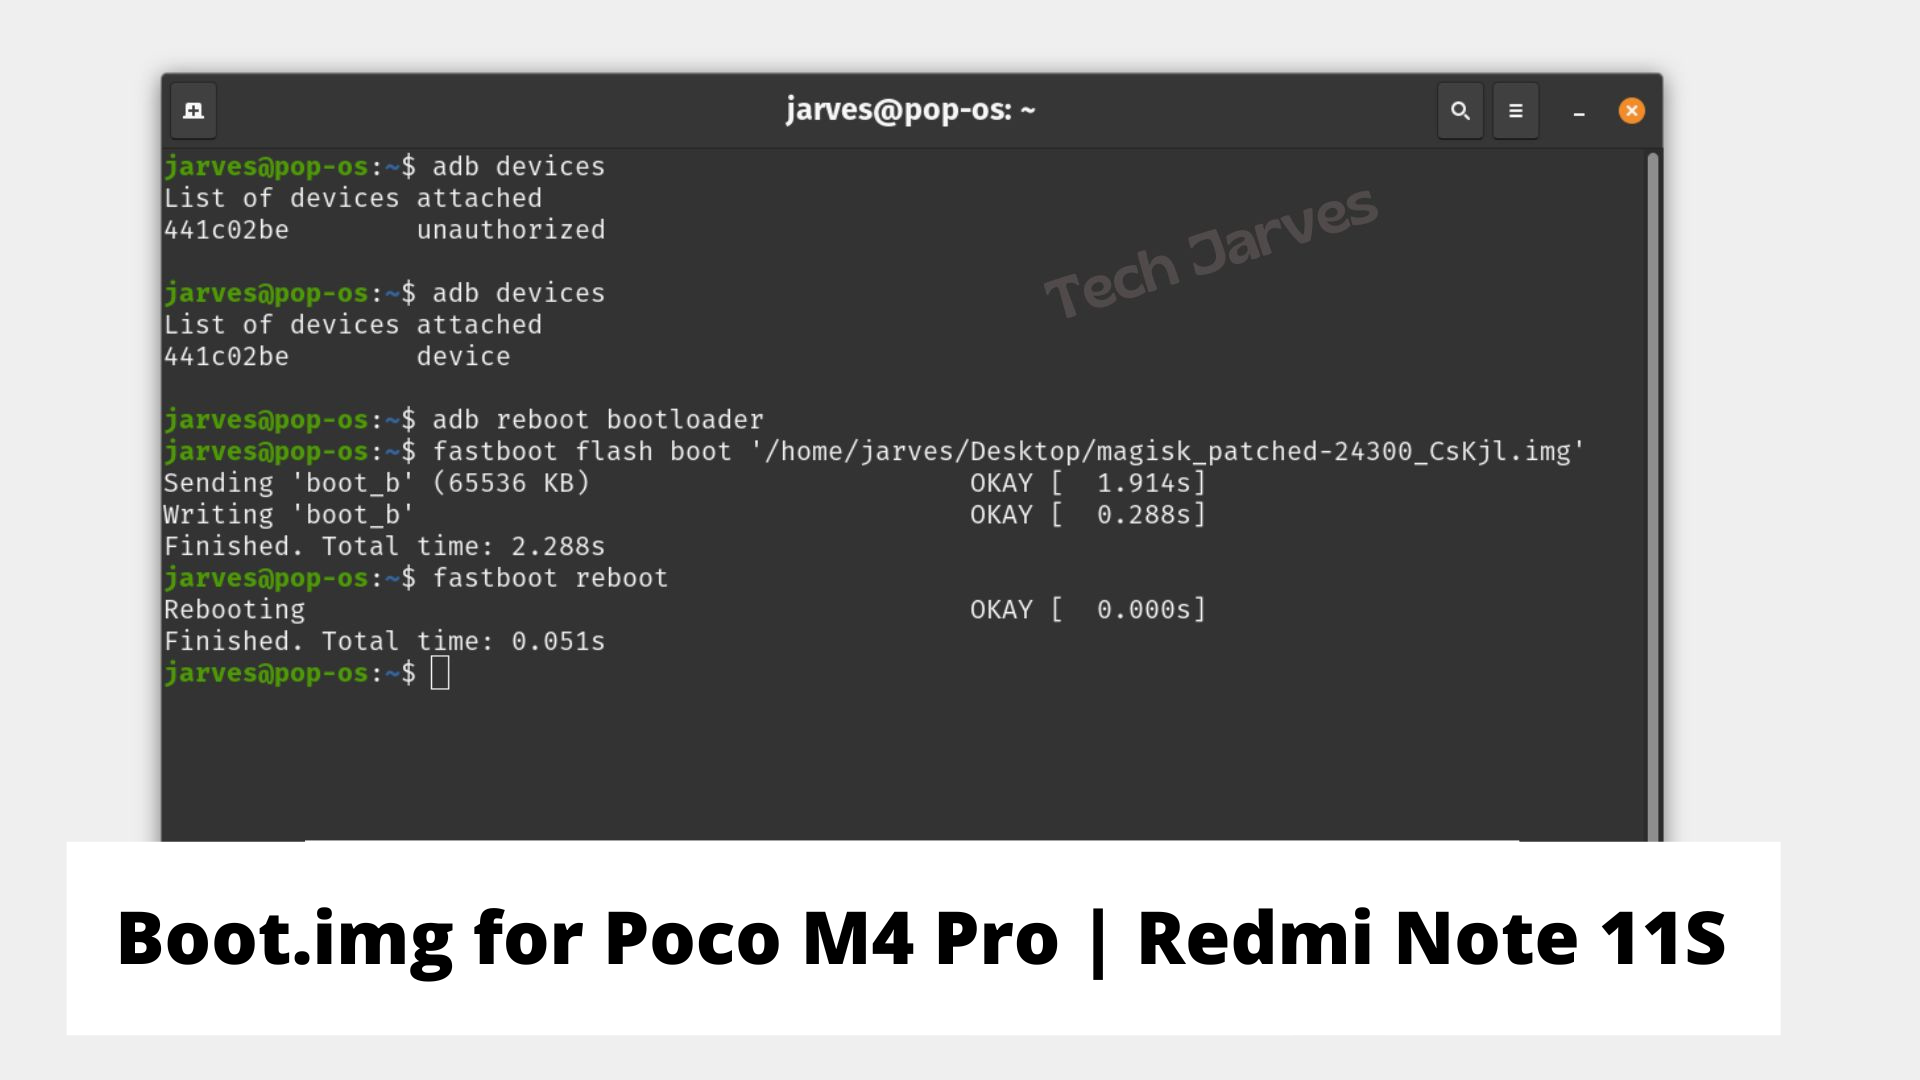 Boot.img for Poco M4 Pro Redmi Note 11S